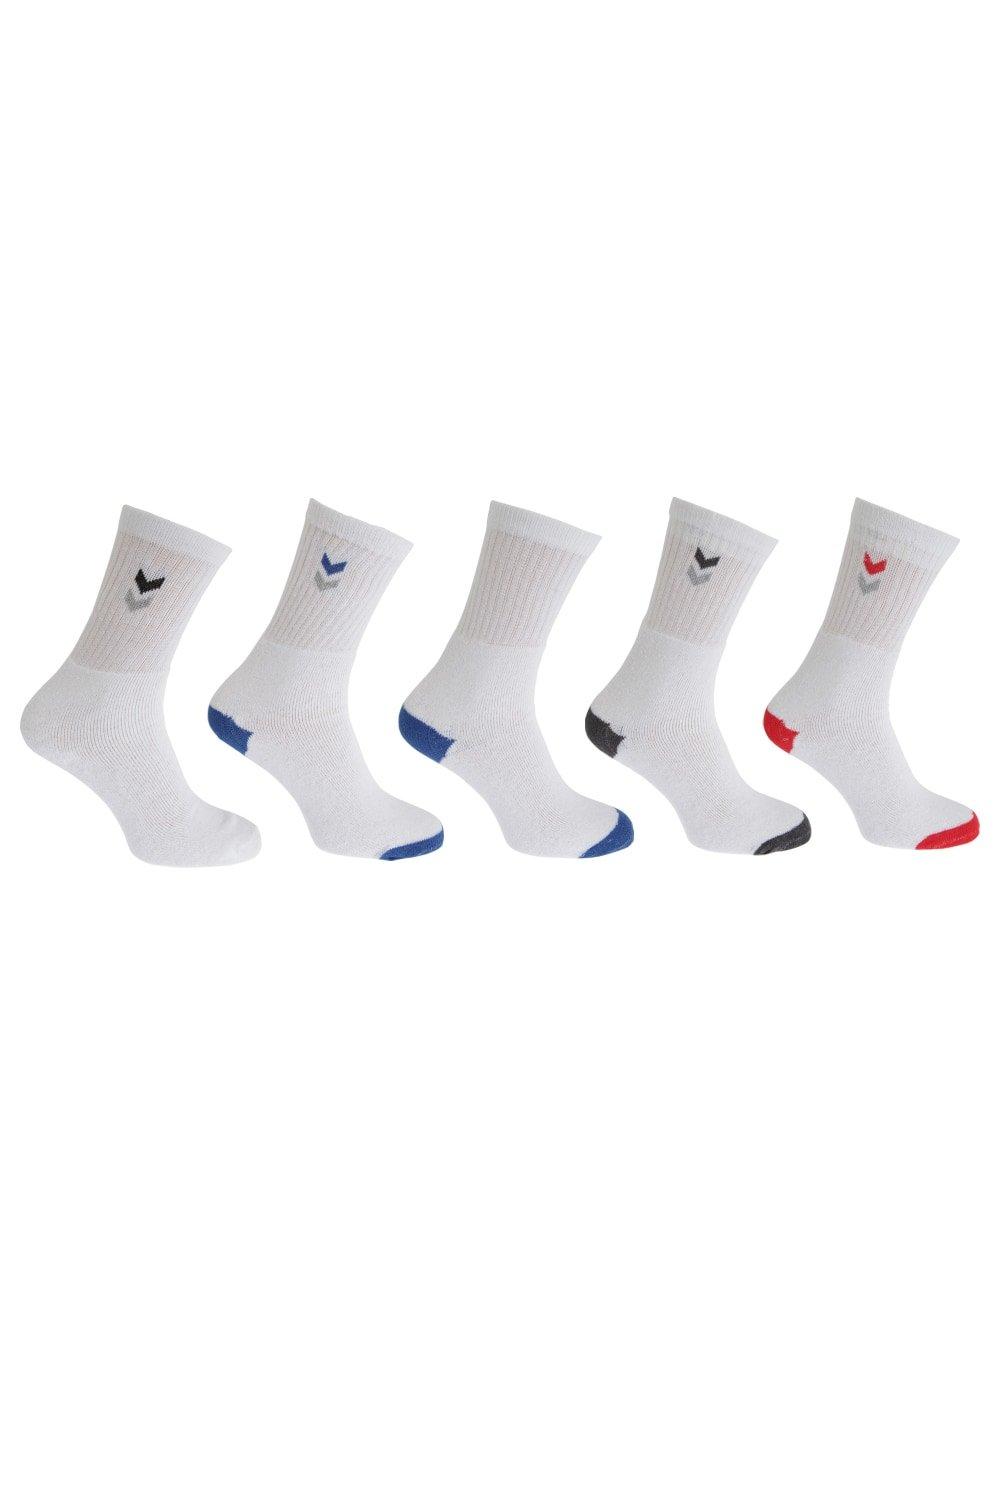 Assorted Emblem Sport Socks (5 Pairs)